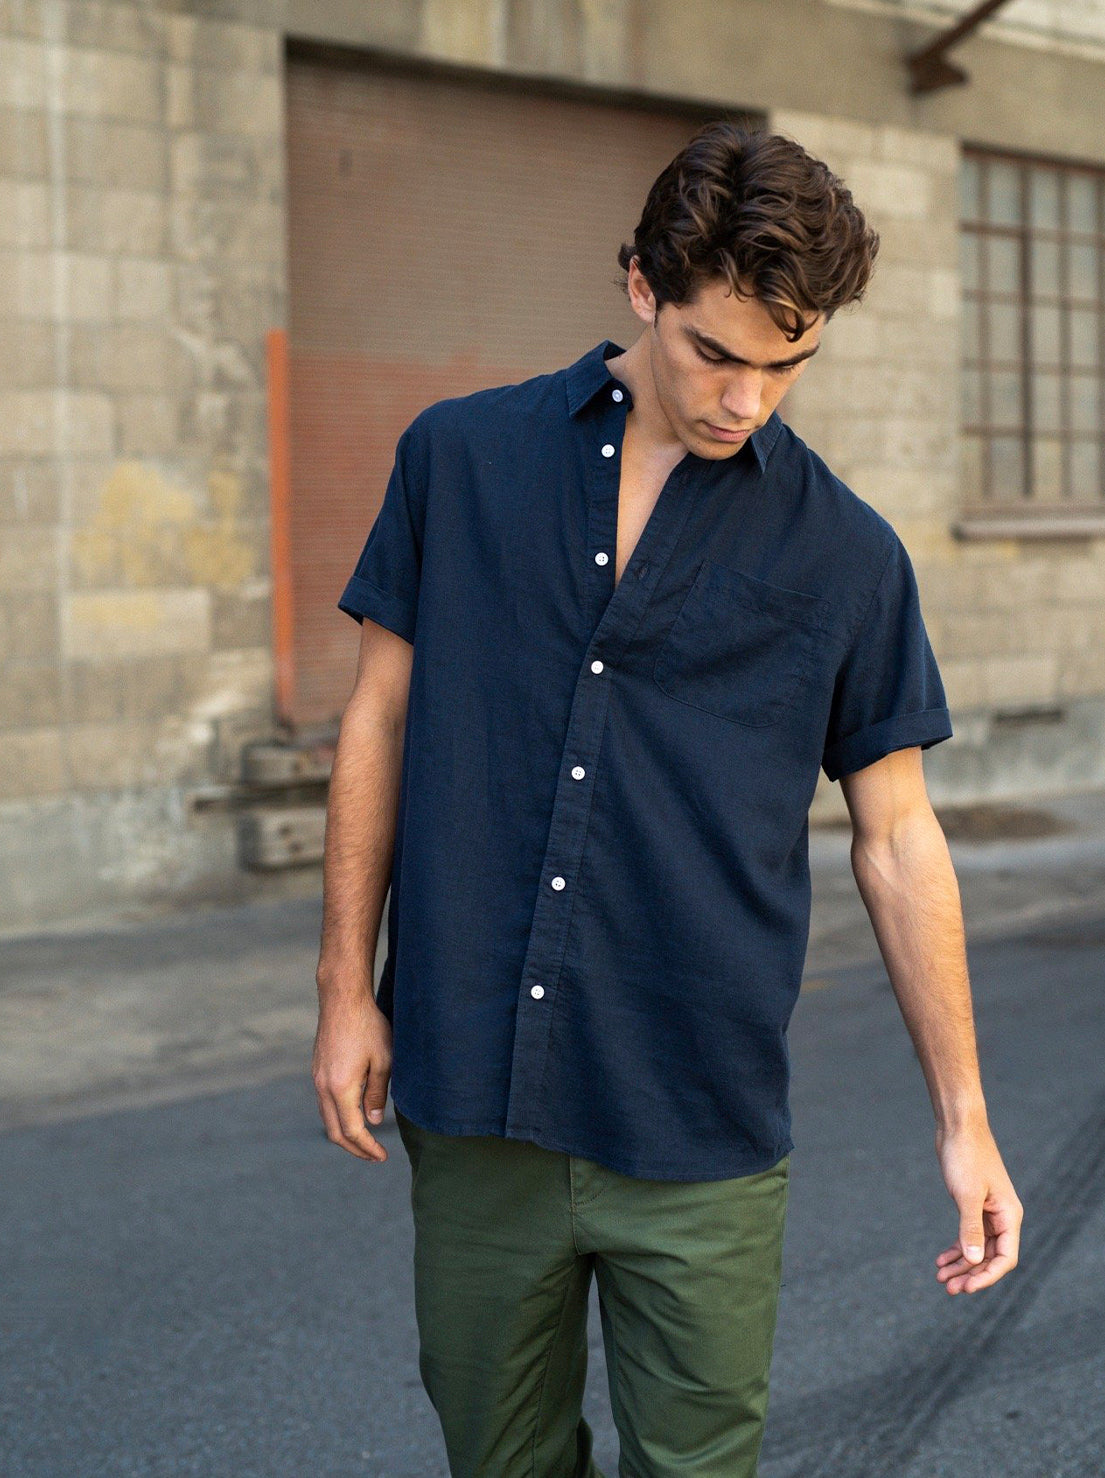 Hemp Clothing Australia - Newtown Shirt - Short Sleeve - Navy